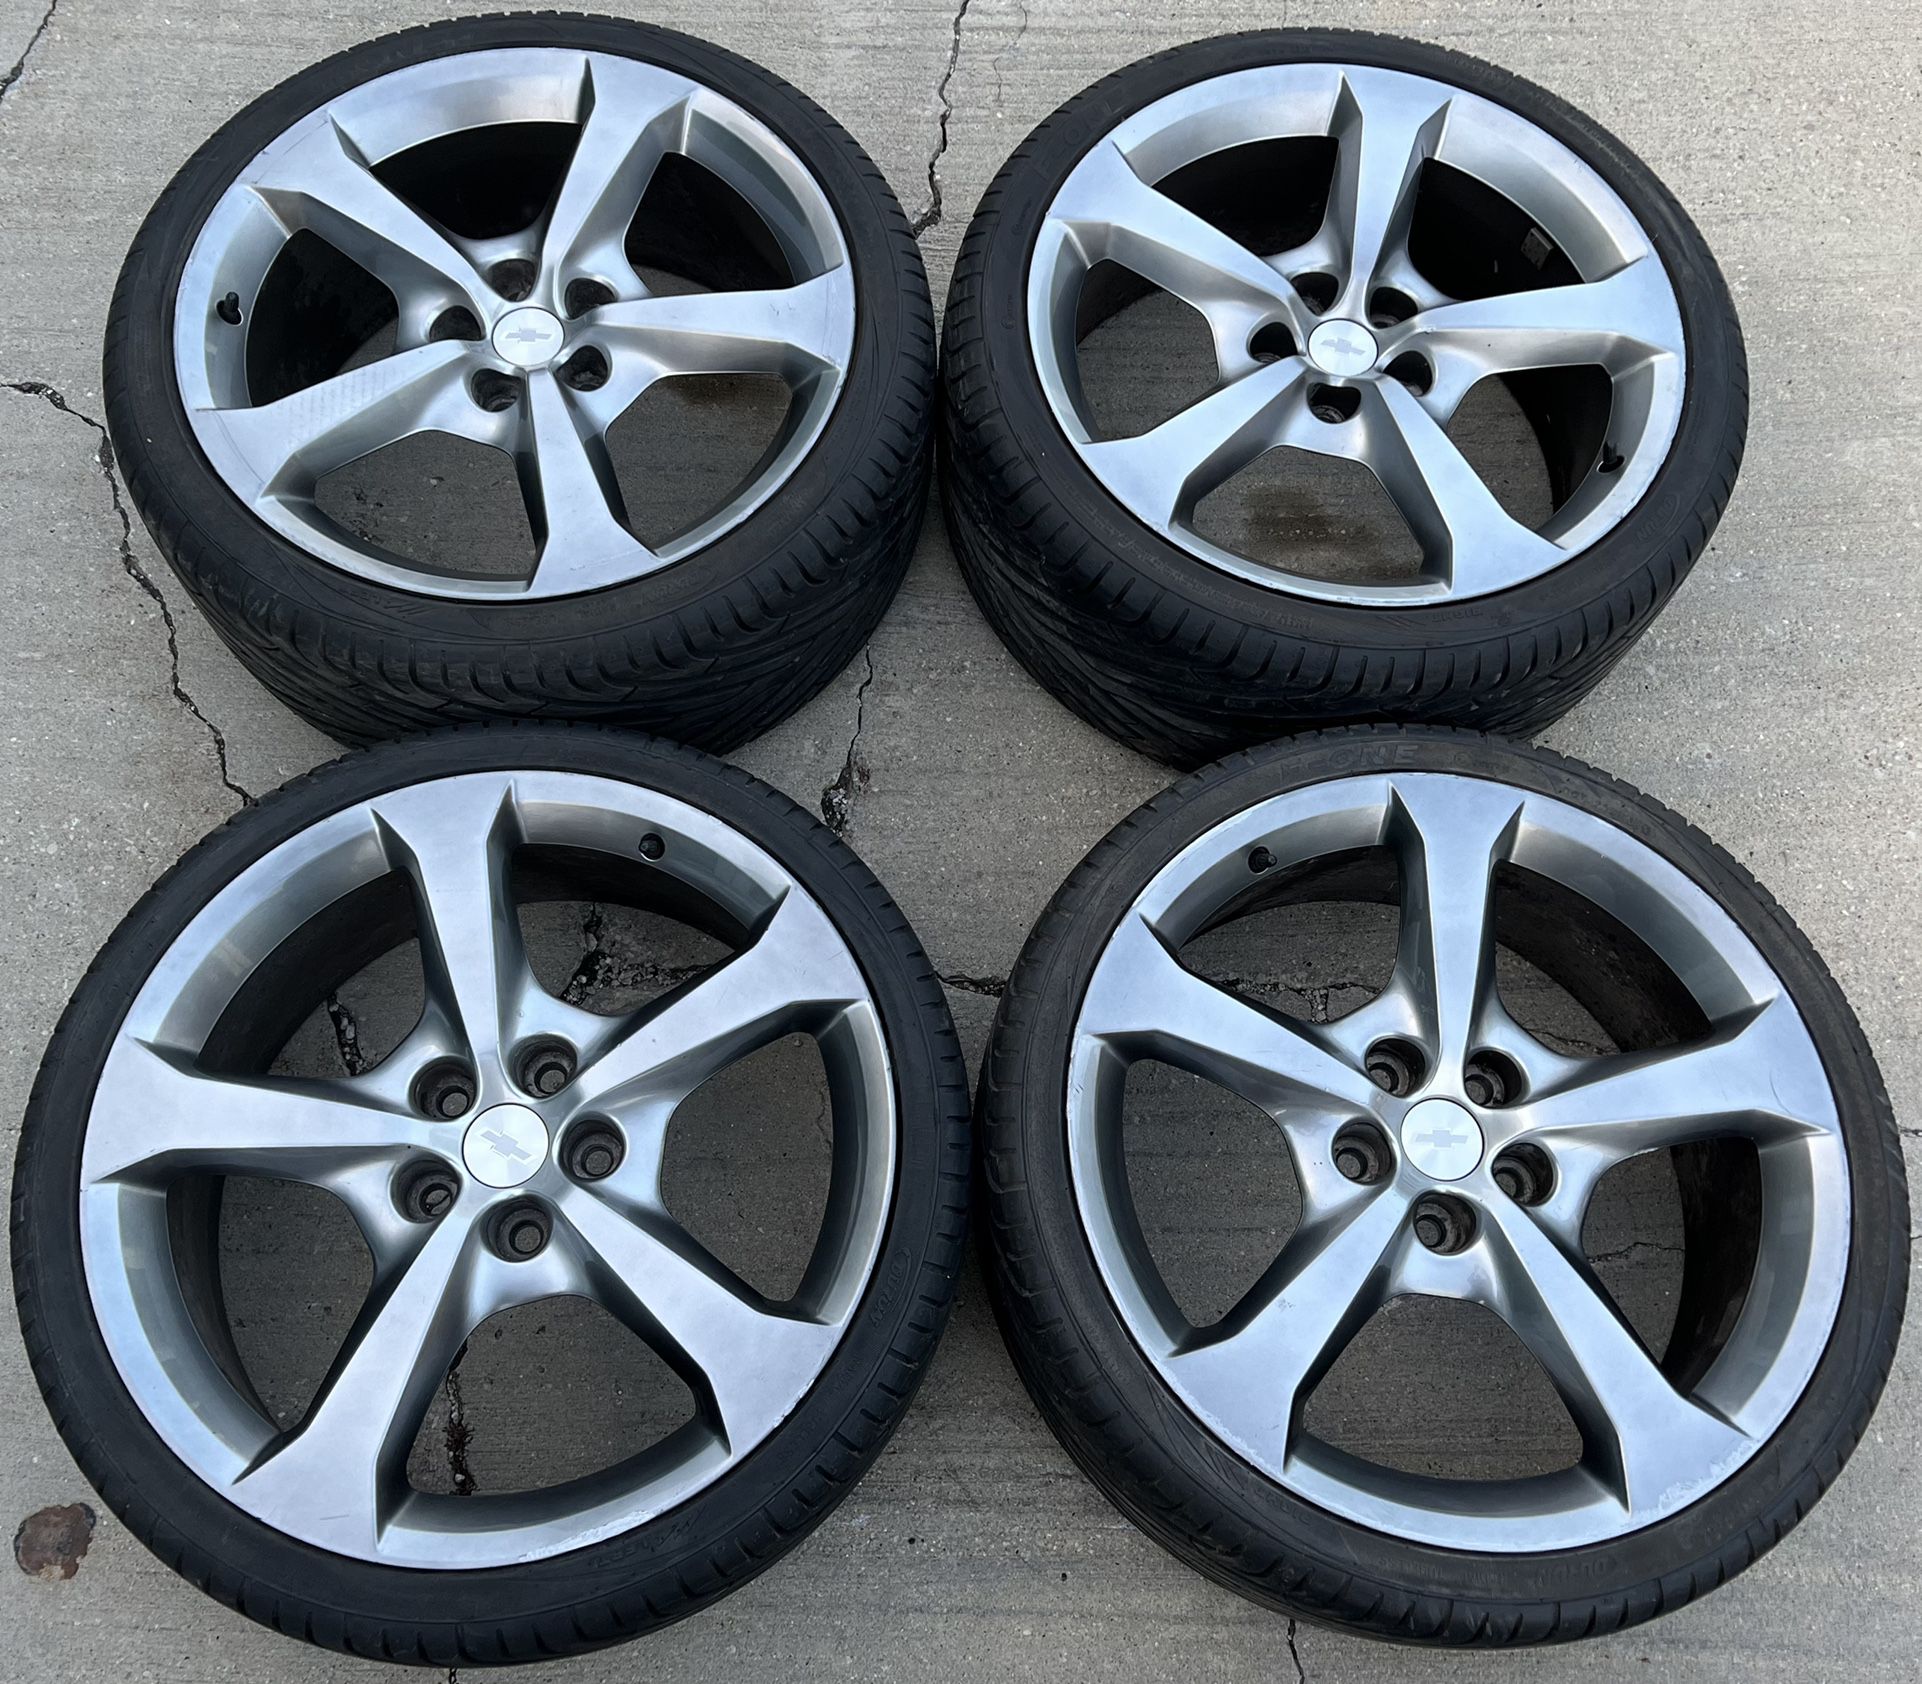 20” Chevy Malibu Corvette Chevrolet Camaro Sport Factory OEM Wheels Rims Tires 20 inch 5x120